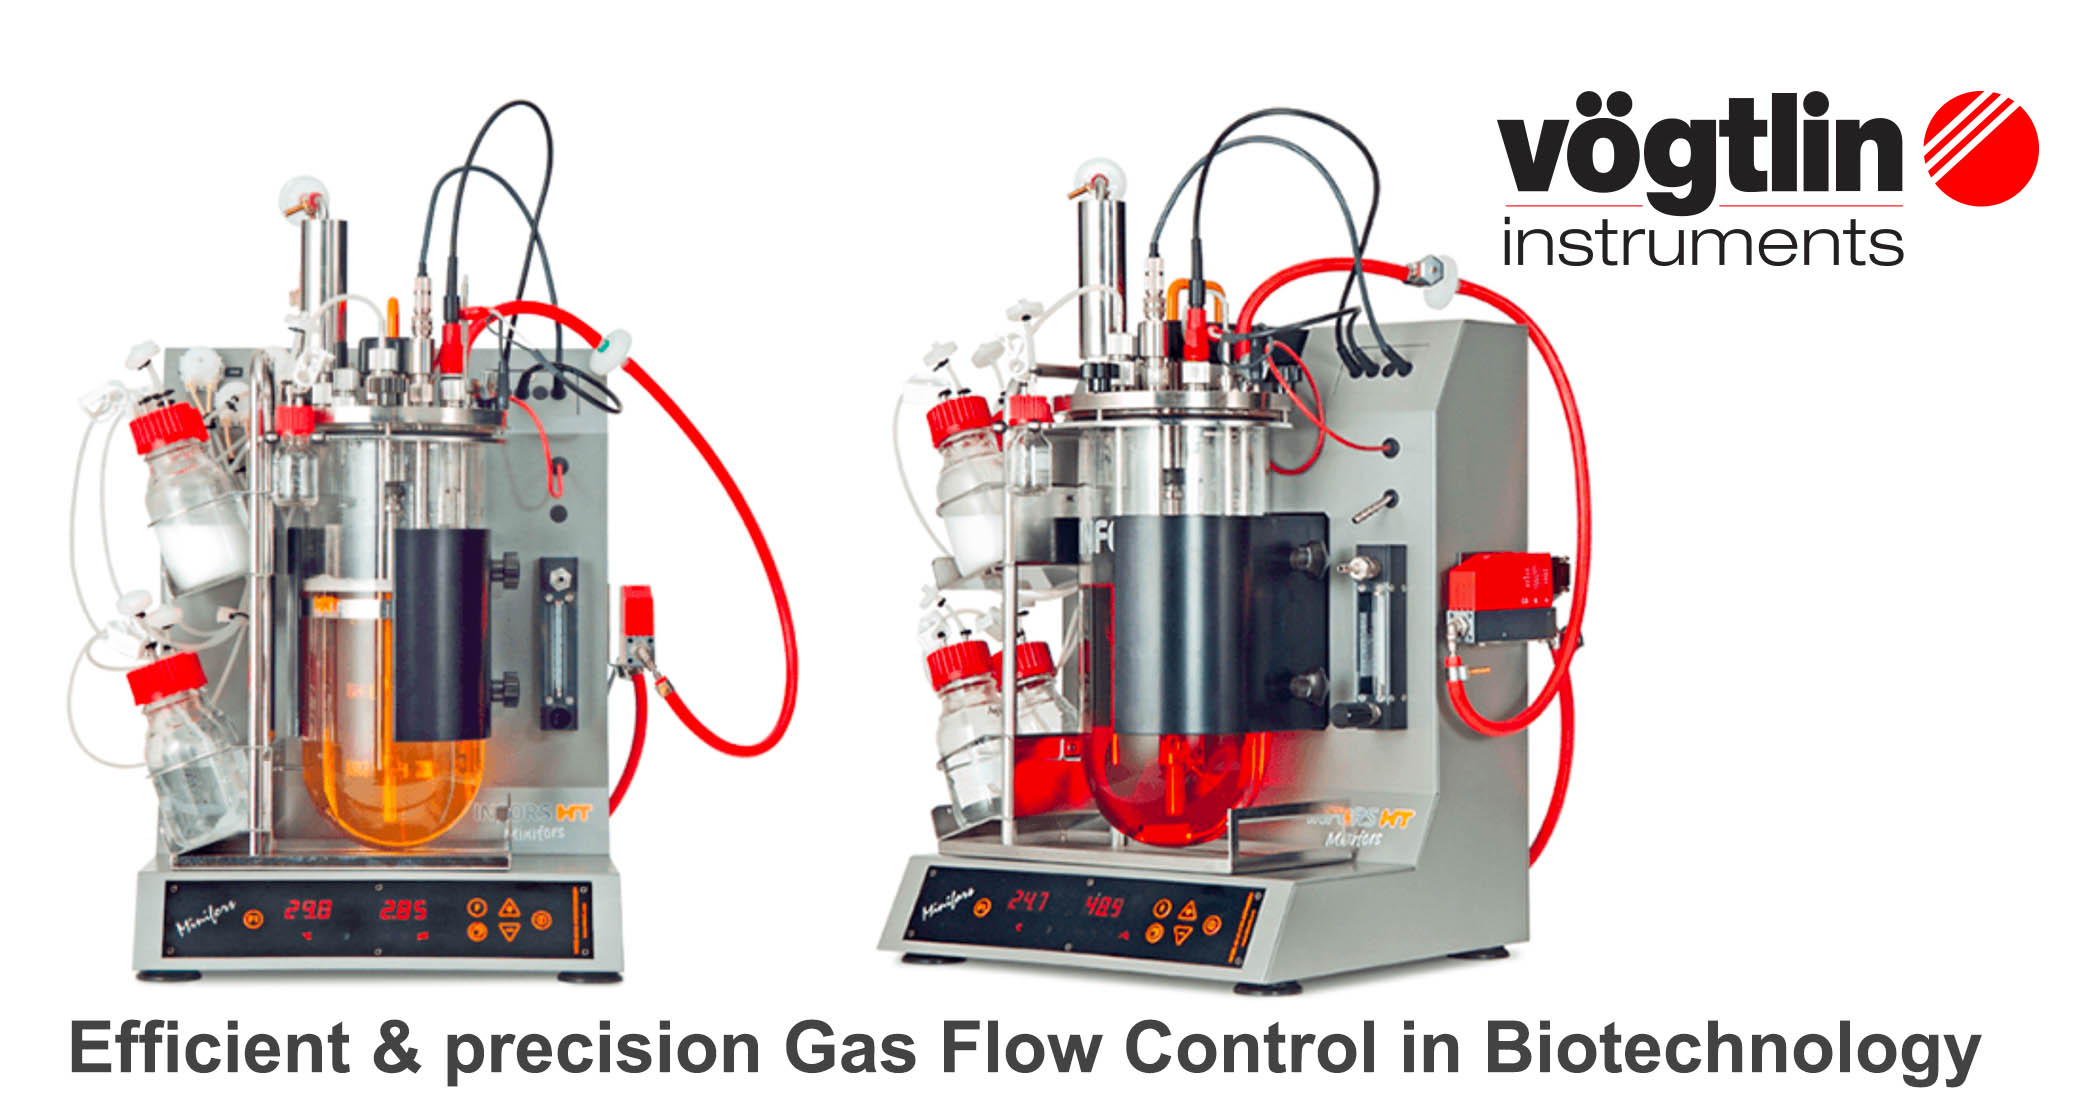 Gas flow control in biotechnology, Vogtlin